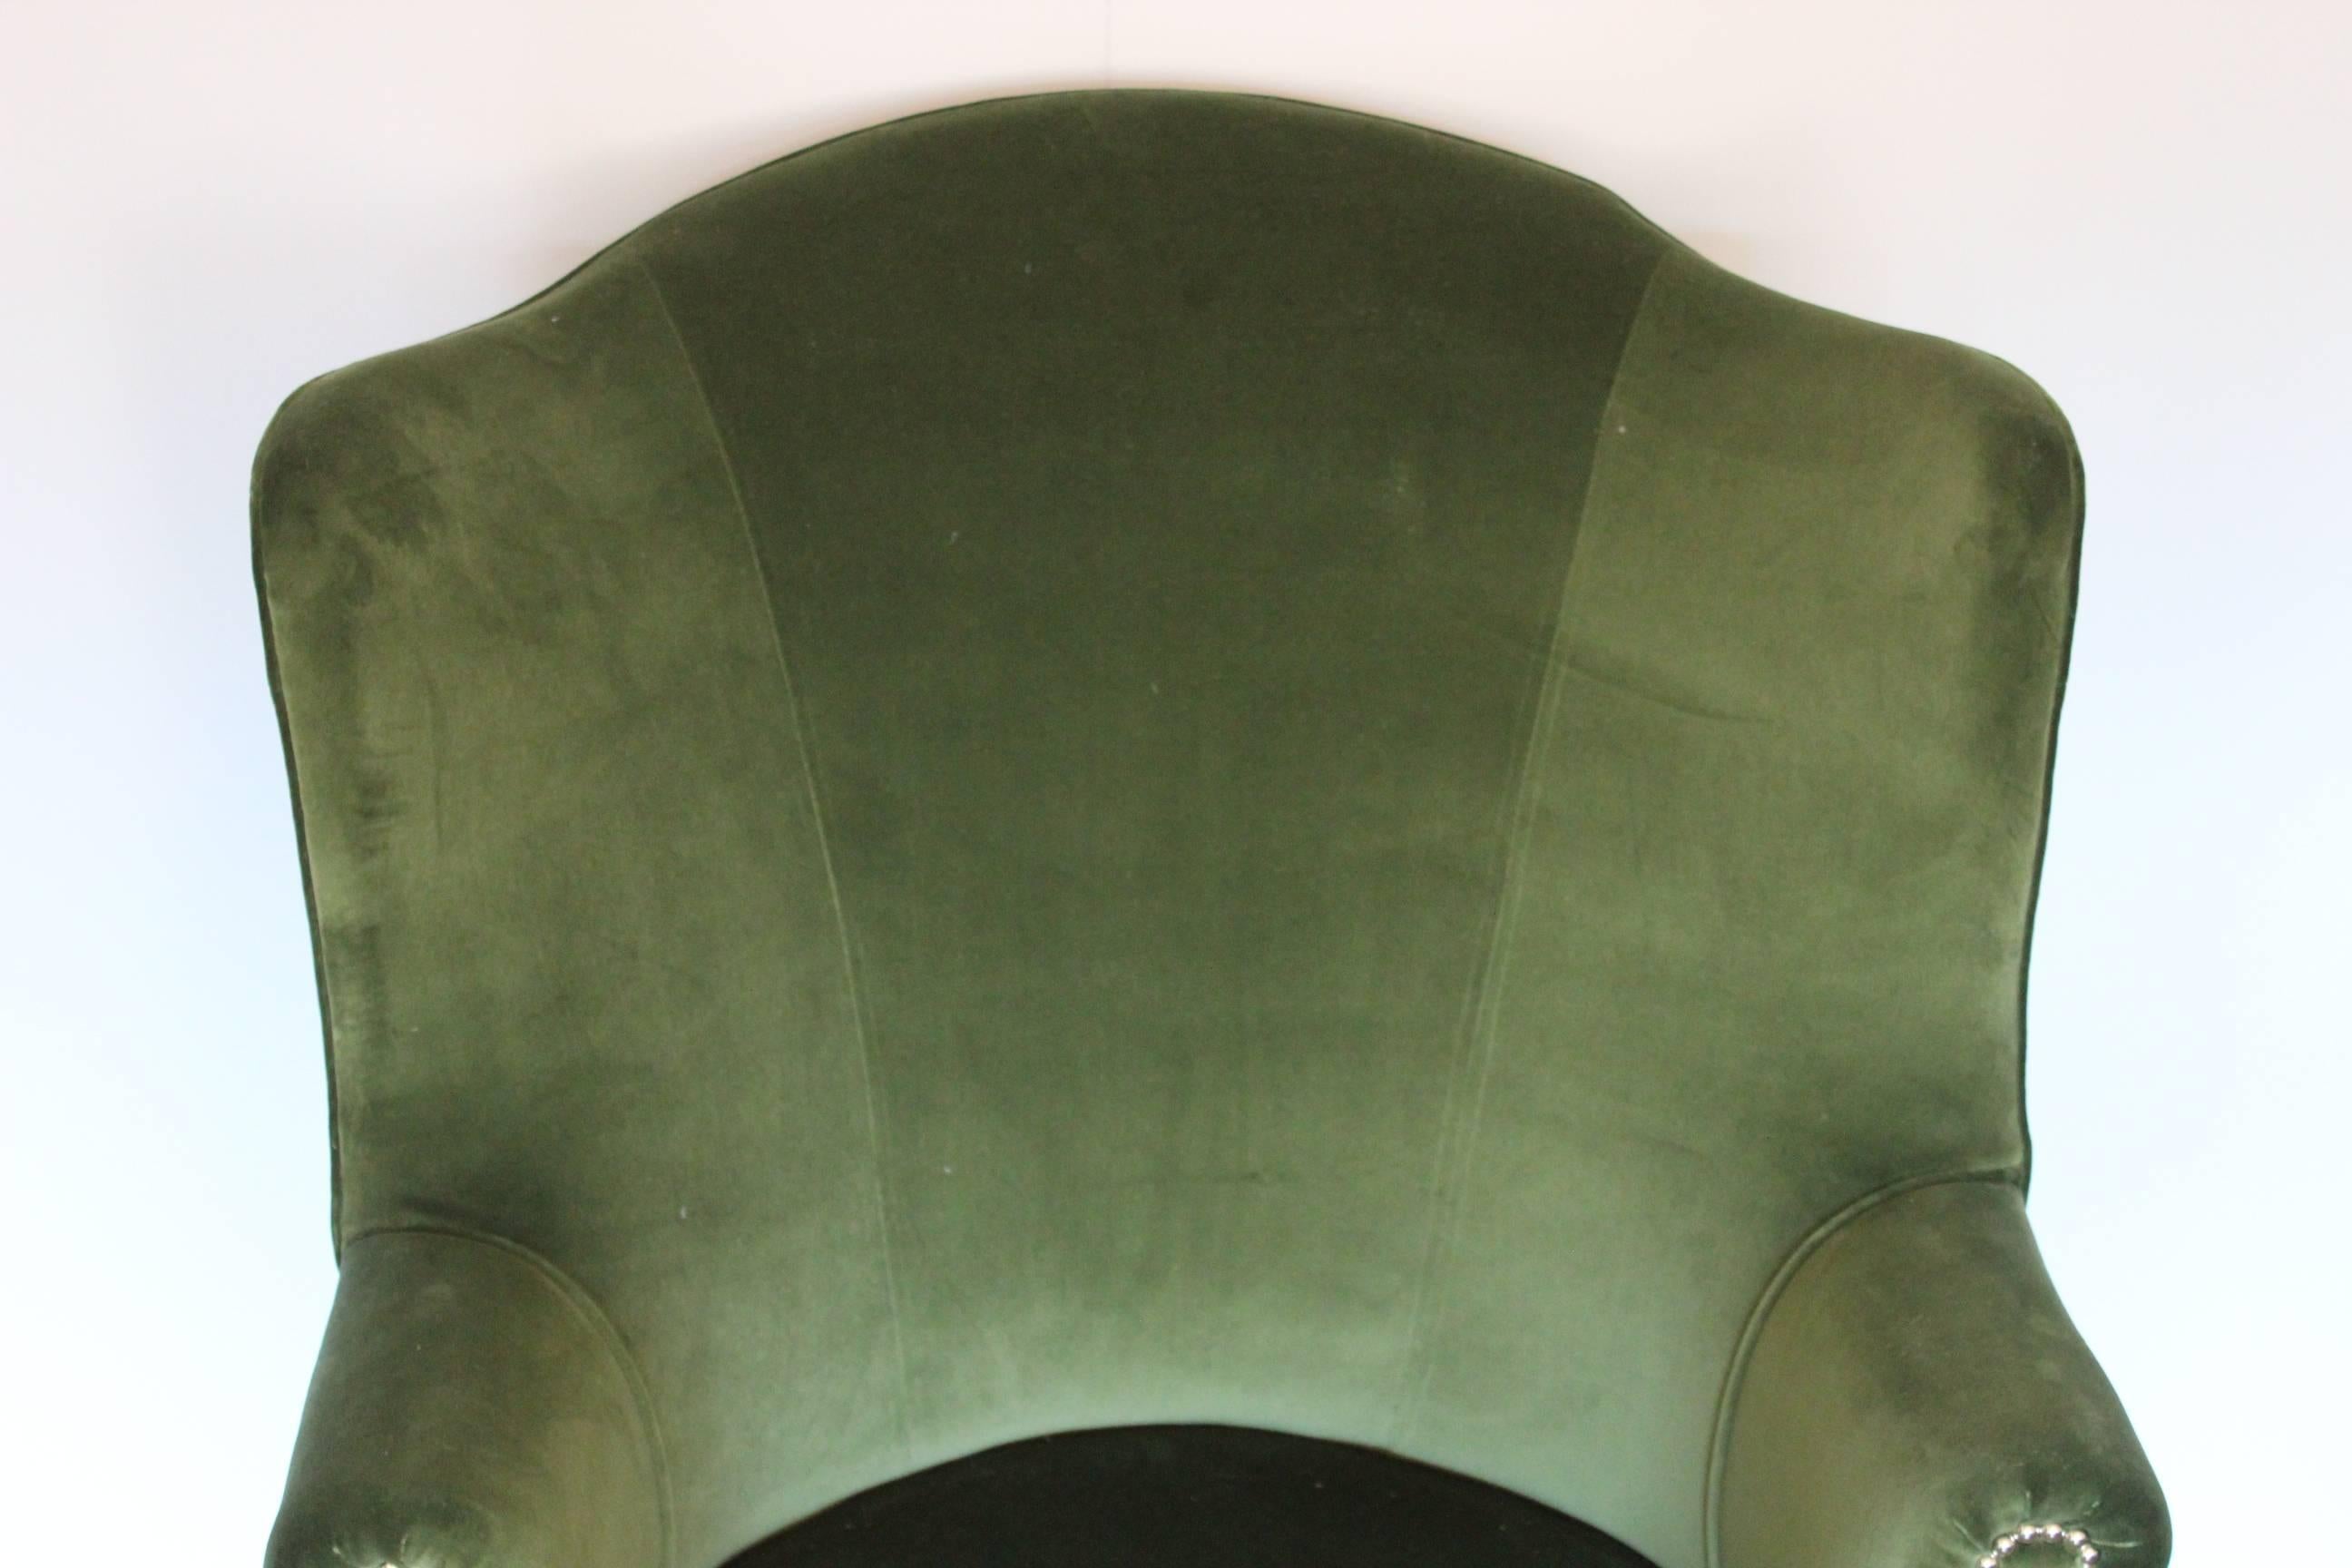 American Ralph Lauren Compact “Wingback” Armchair in “English Riding” Green Velvet